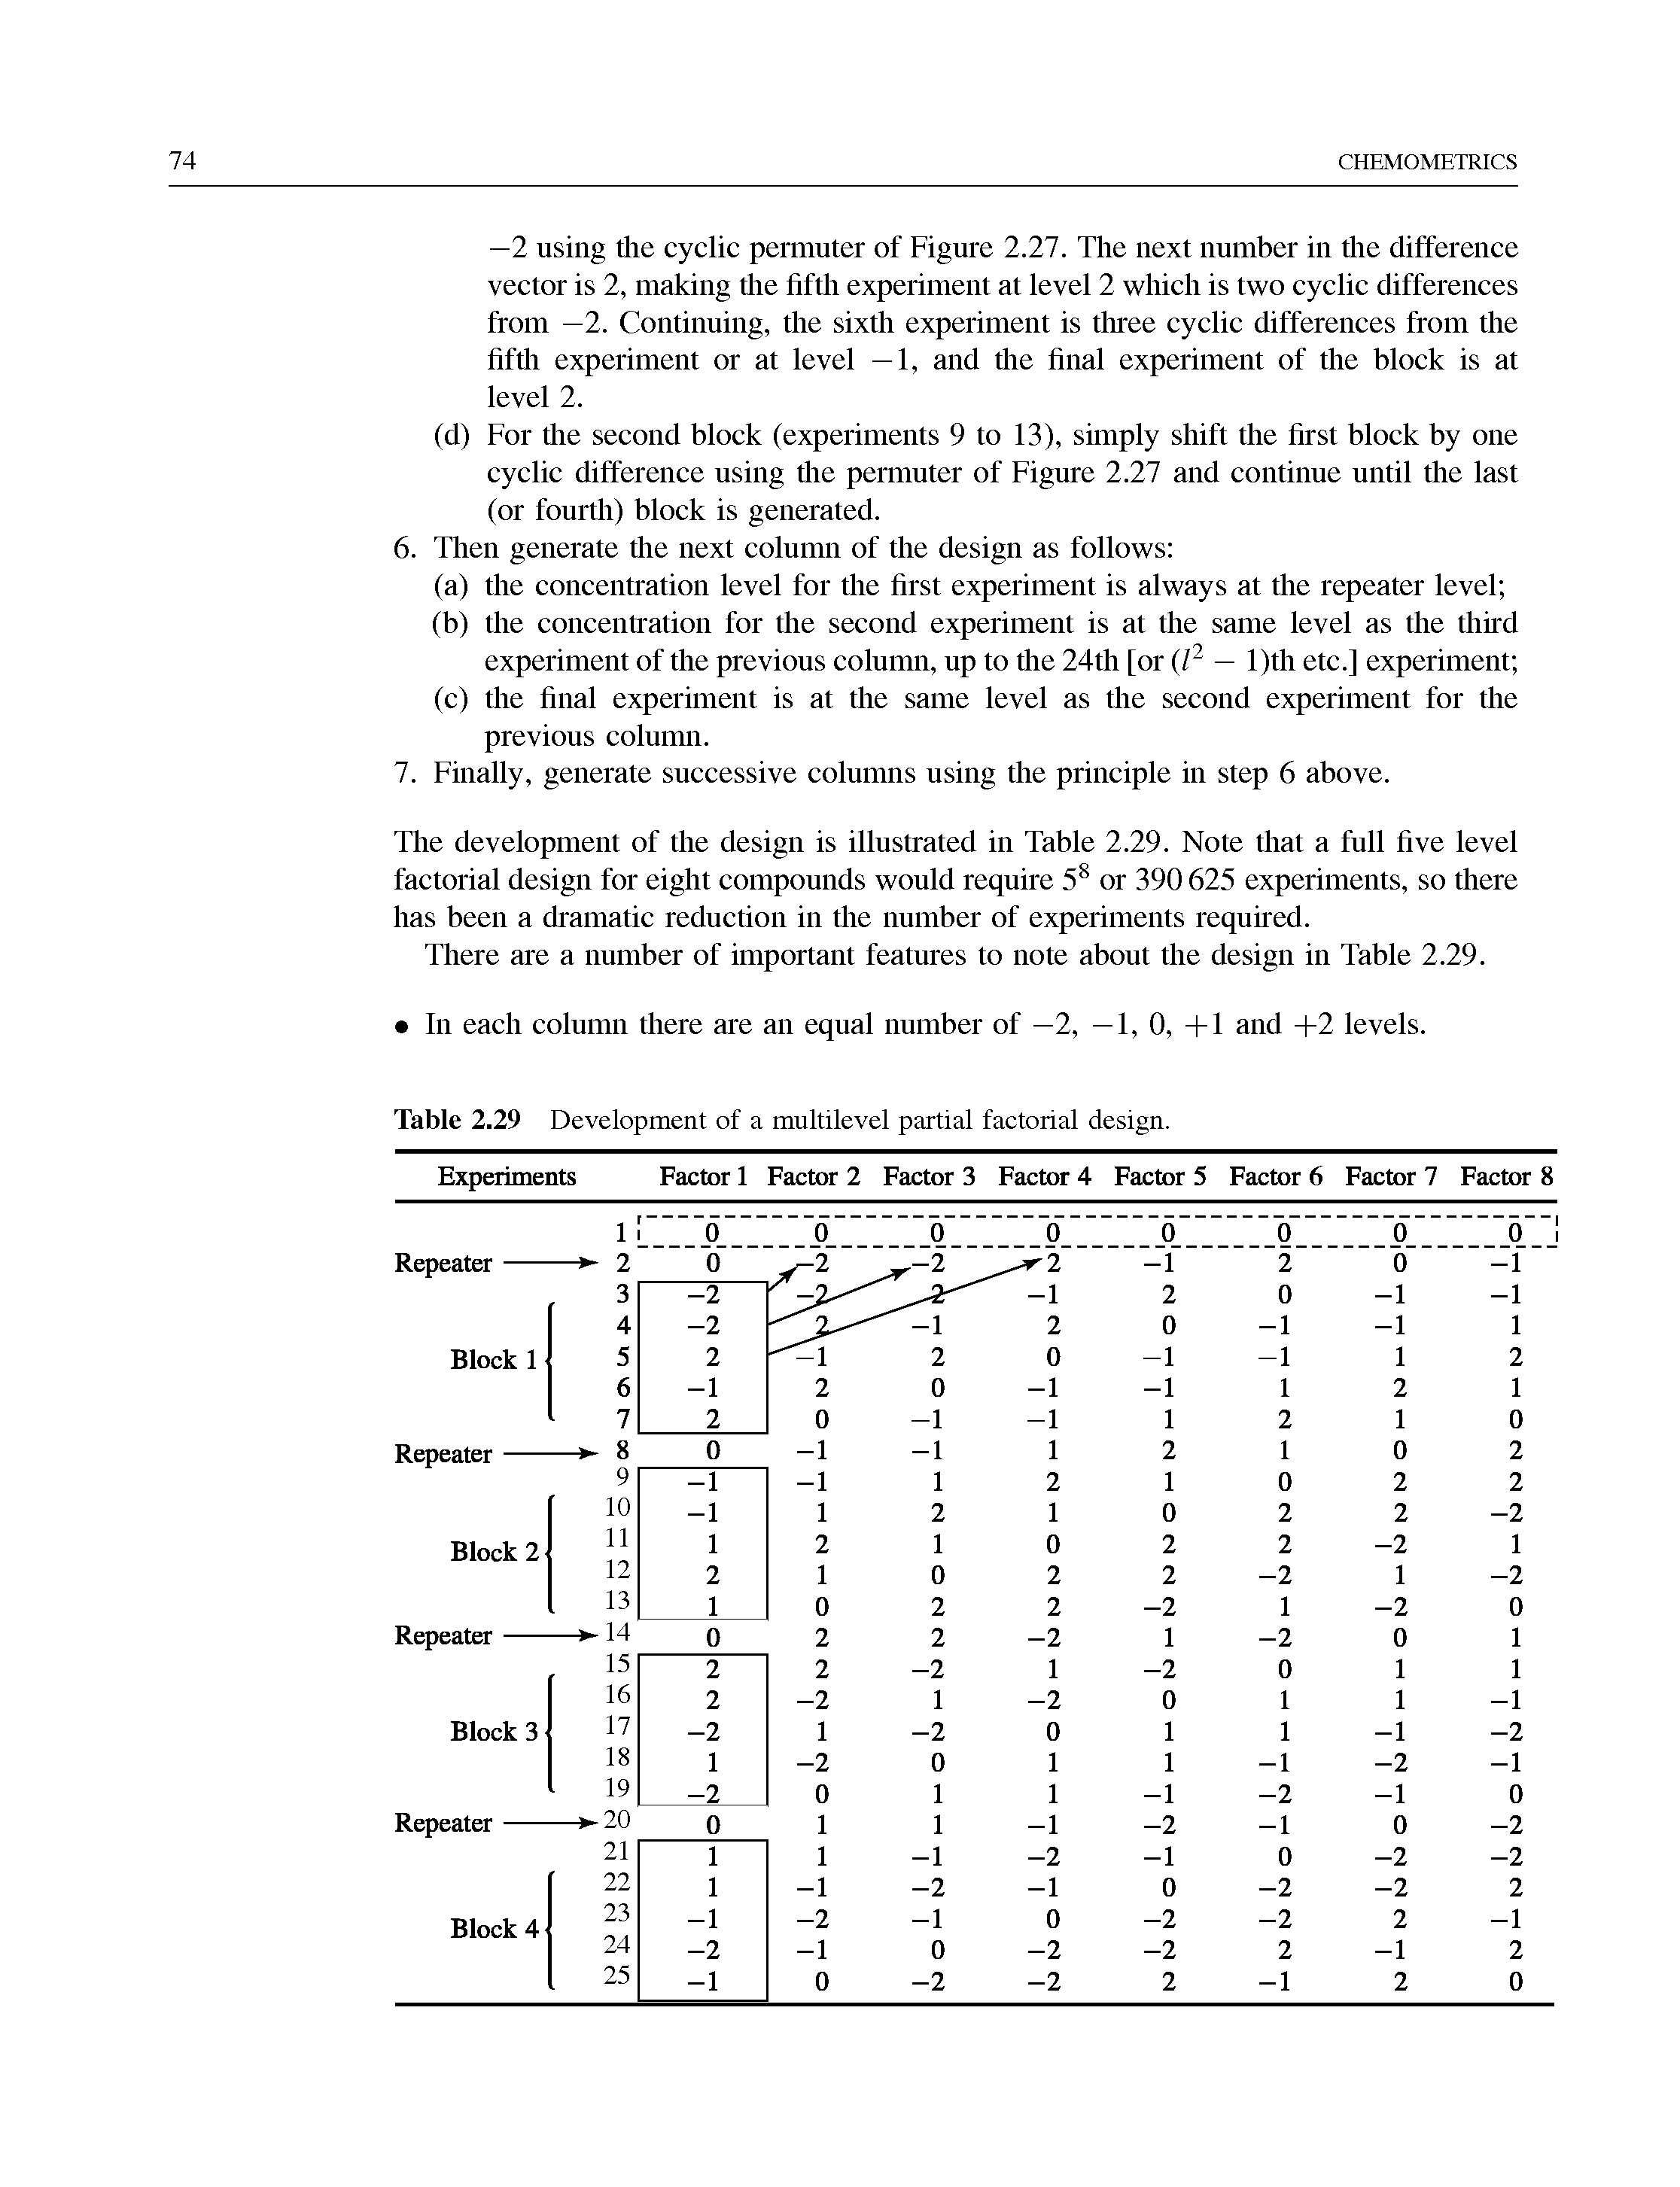 Table 2.29 Development of a multilevel partial factorial design.